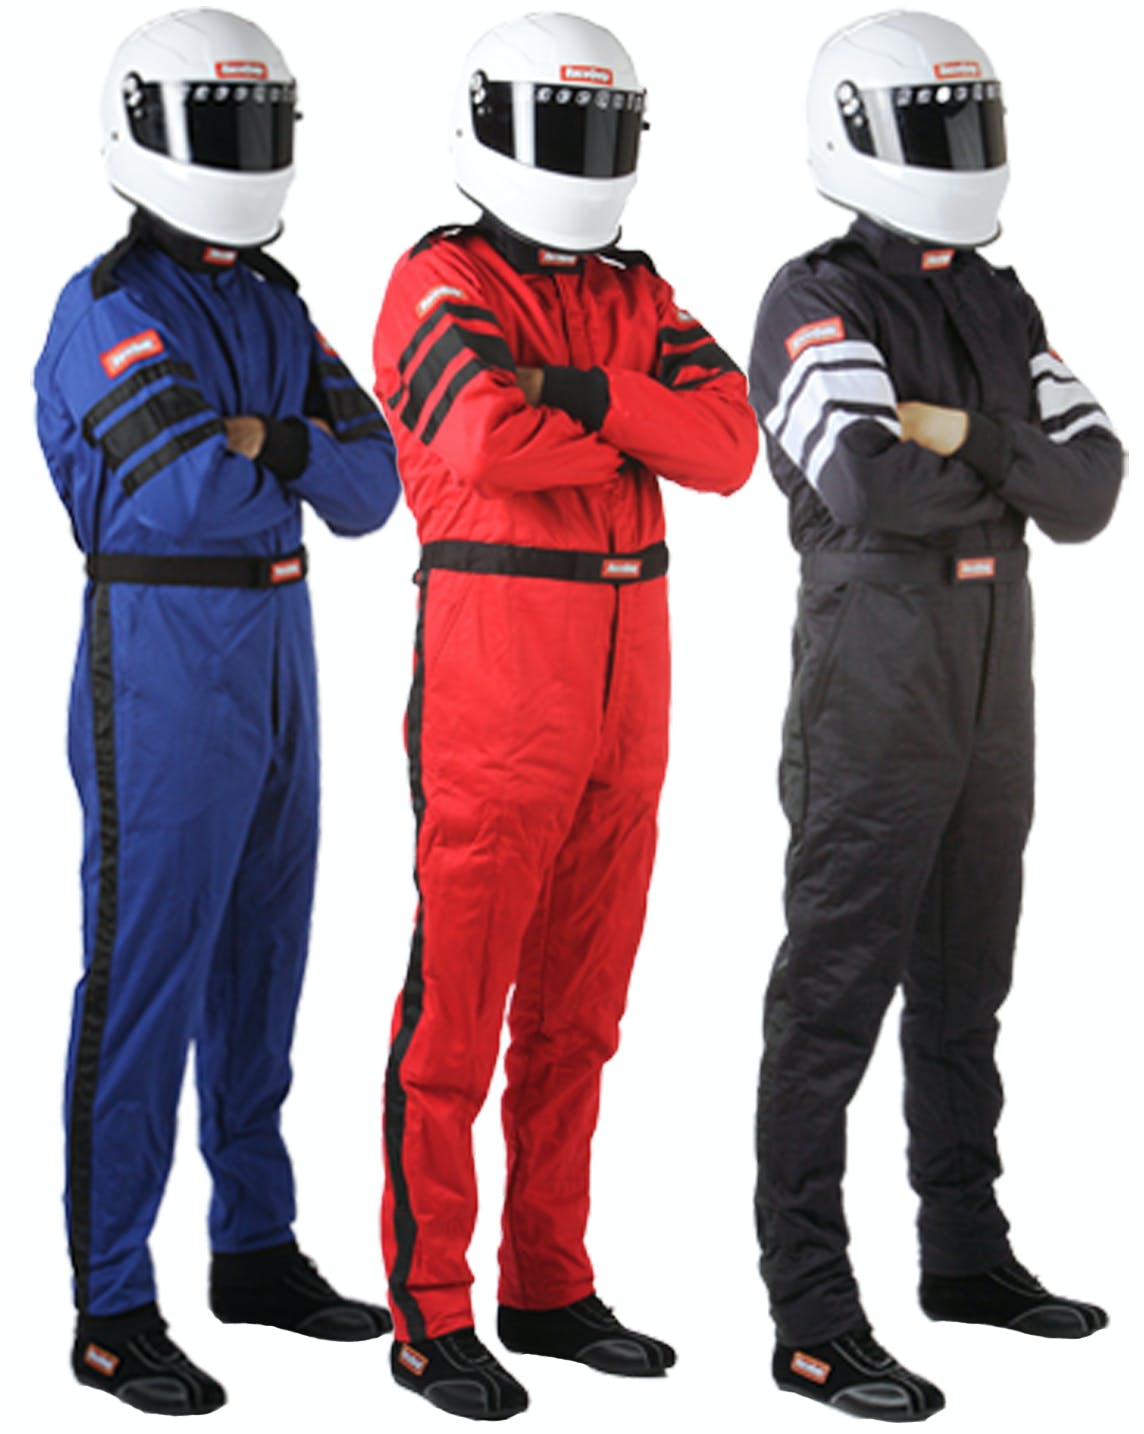 RaceQuip 120024 SFI-5 Pyrovatex One-Piece Multi-Layer Racing Fire Suit (Blue, Medium-Tall)